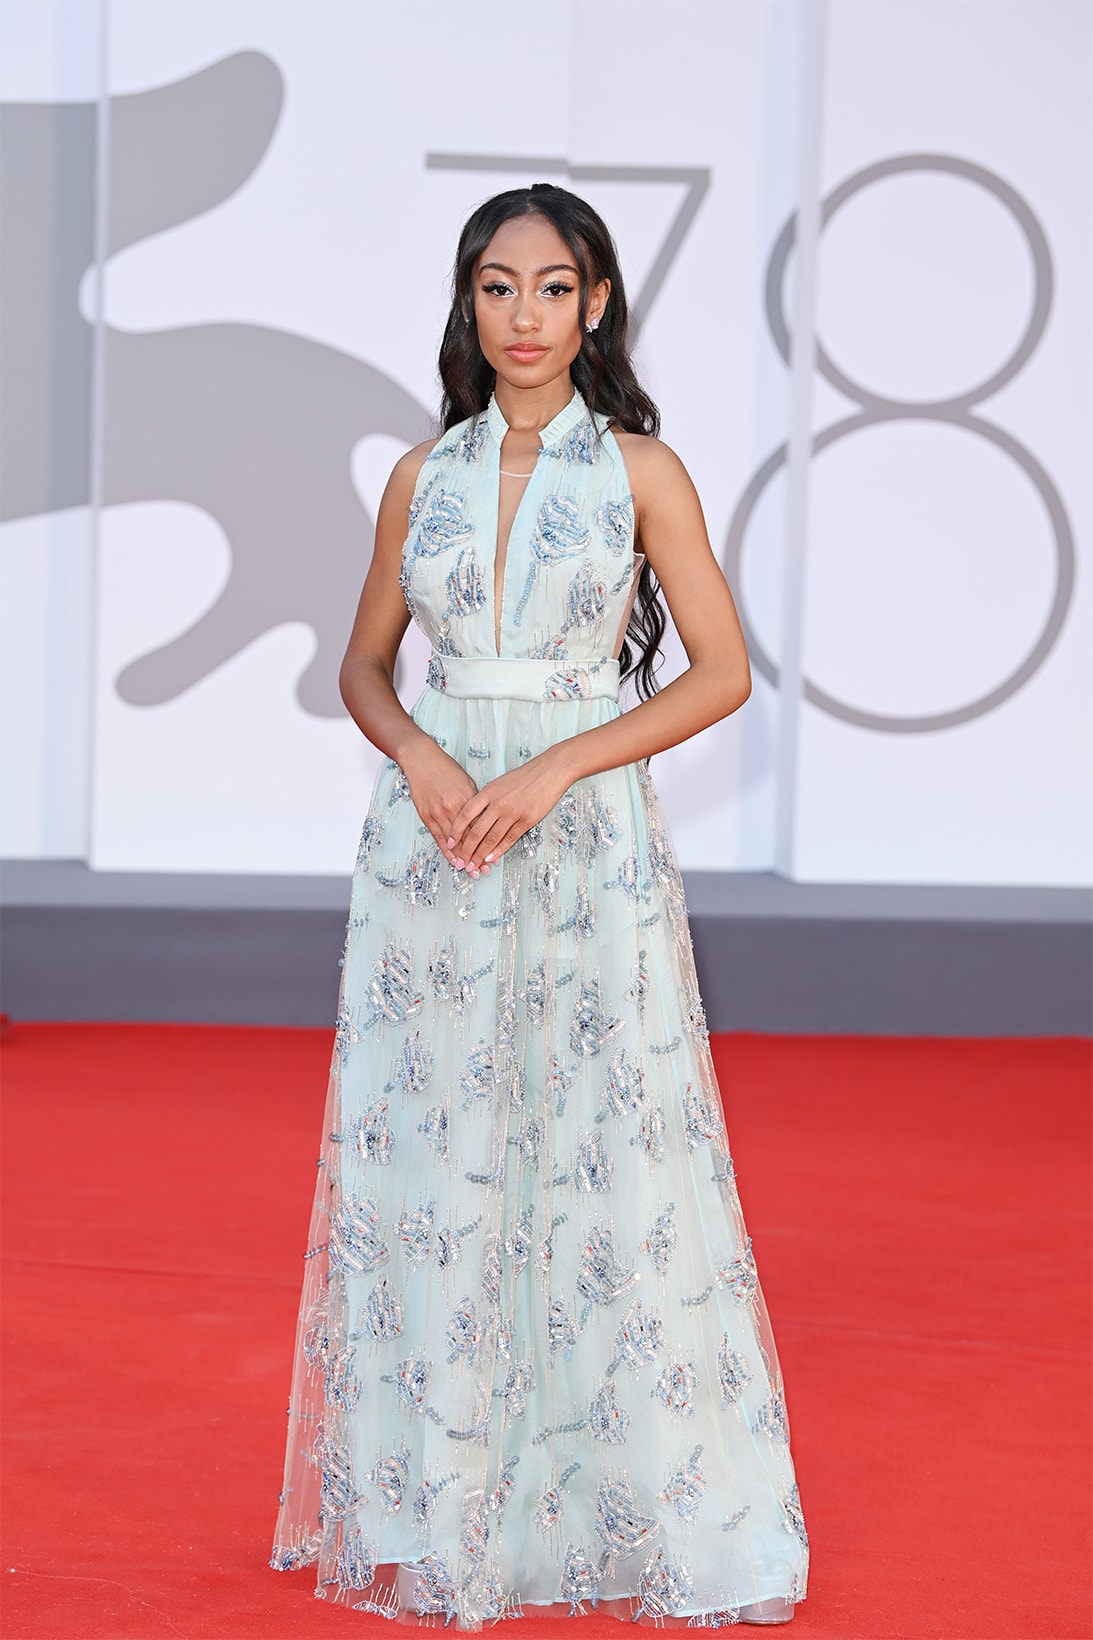 Lexi Underwood 2021 Venice Film Festival Red Carpet Best Dressed Celebrities Style